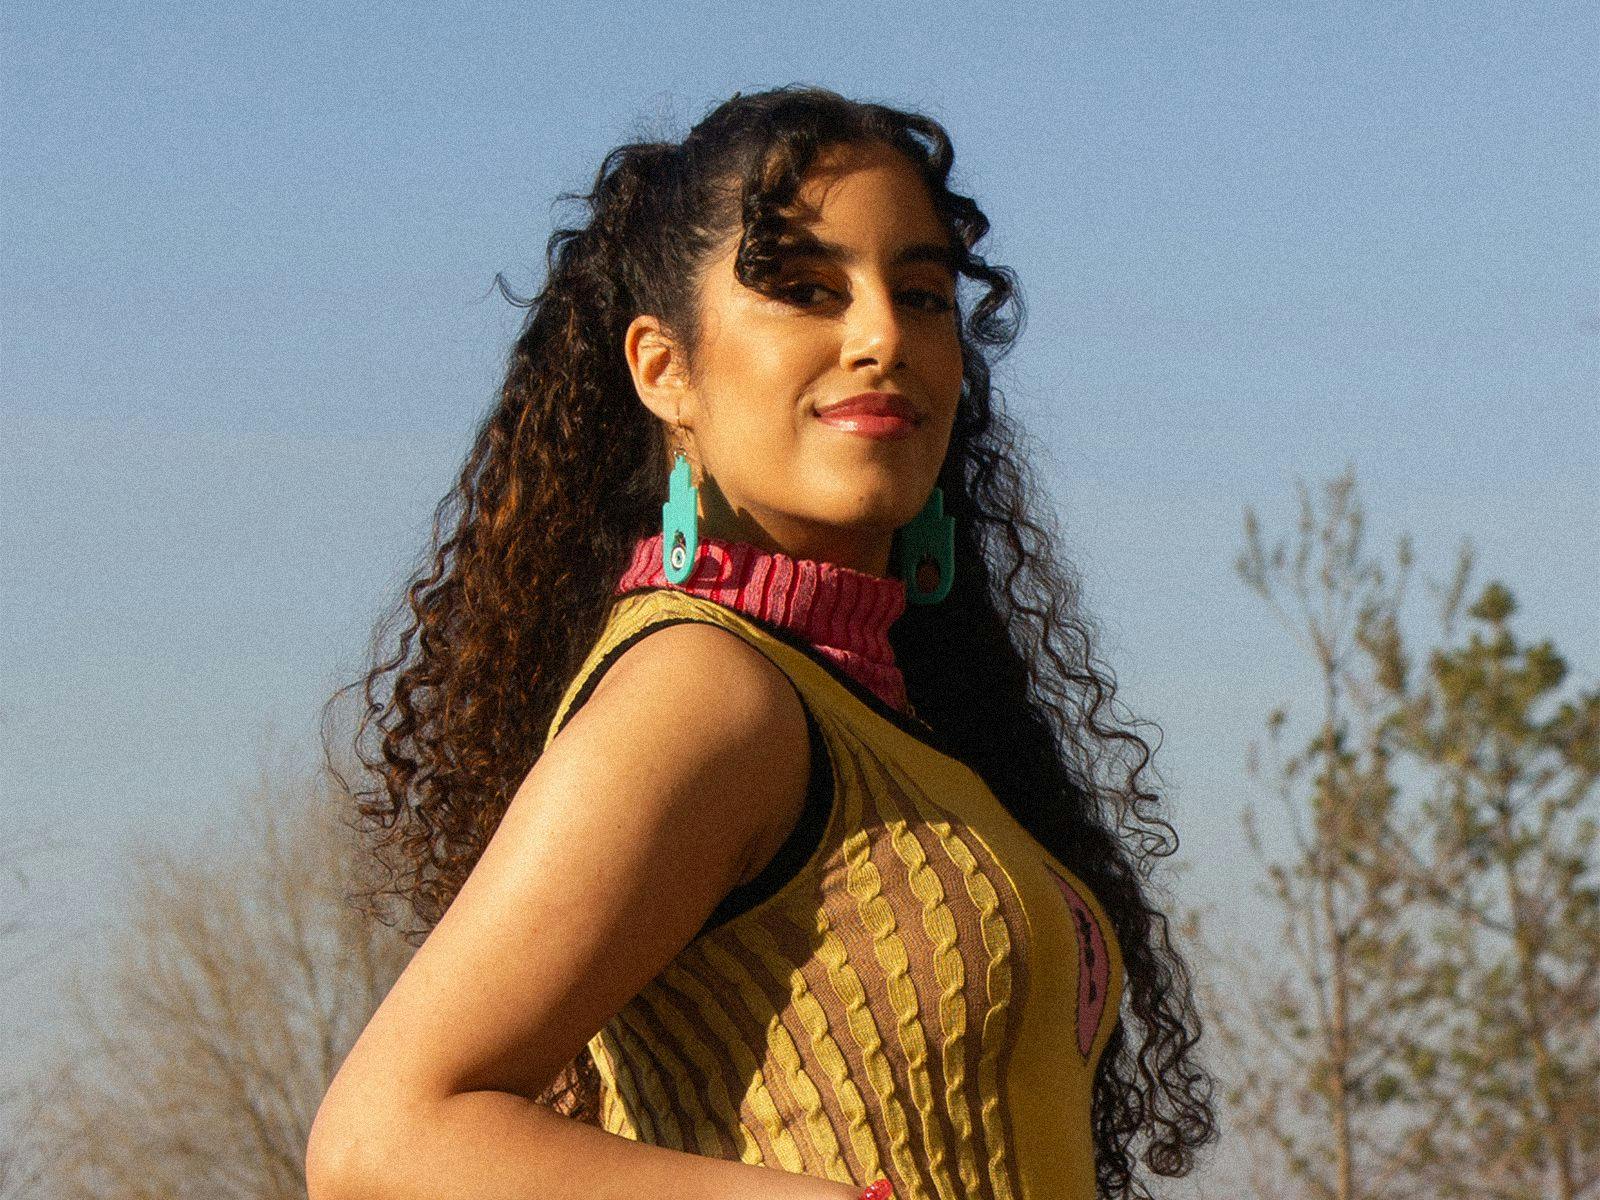 Nooriyah posing wearing a yellow top and big blue earrings.